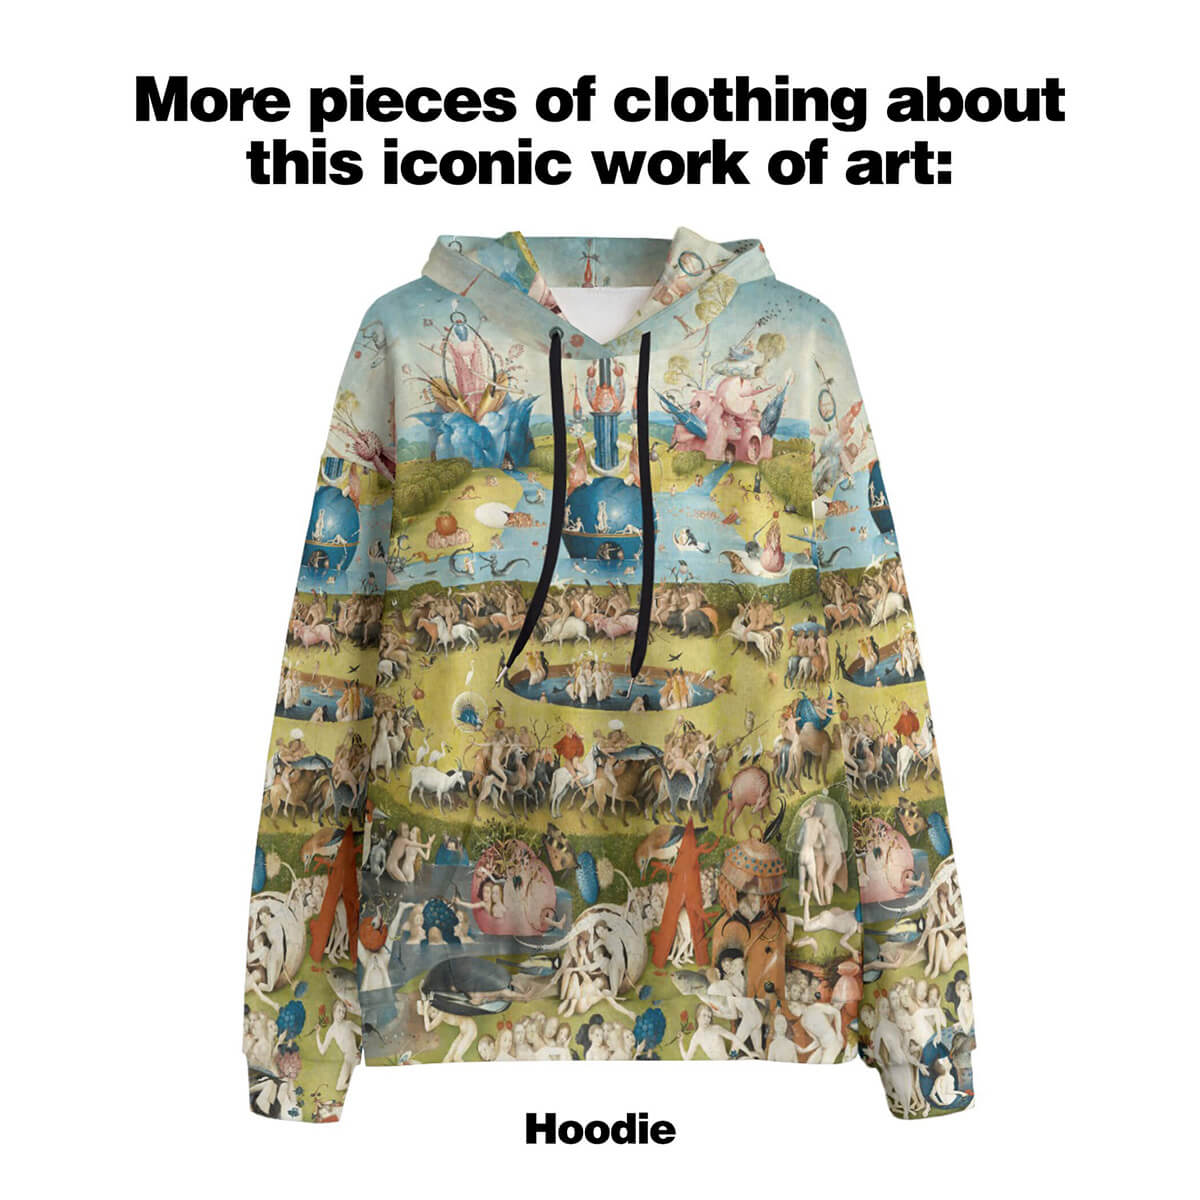 A Földi örömök kertje – Hieronymus Bosch pulóver